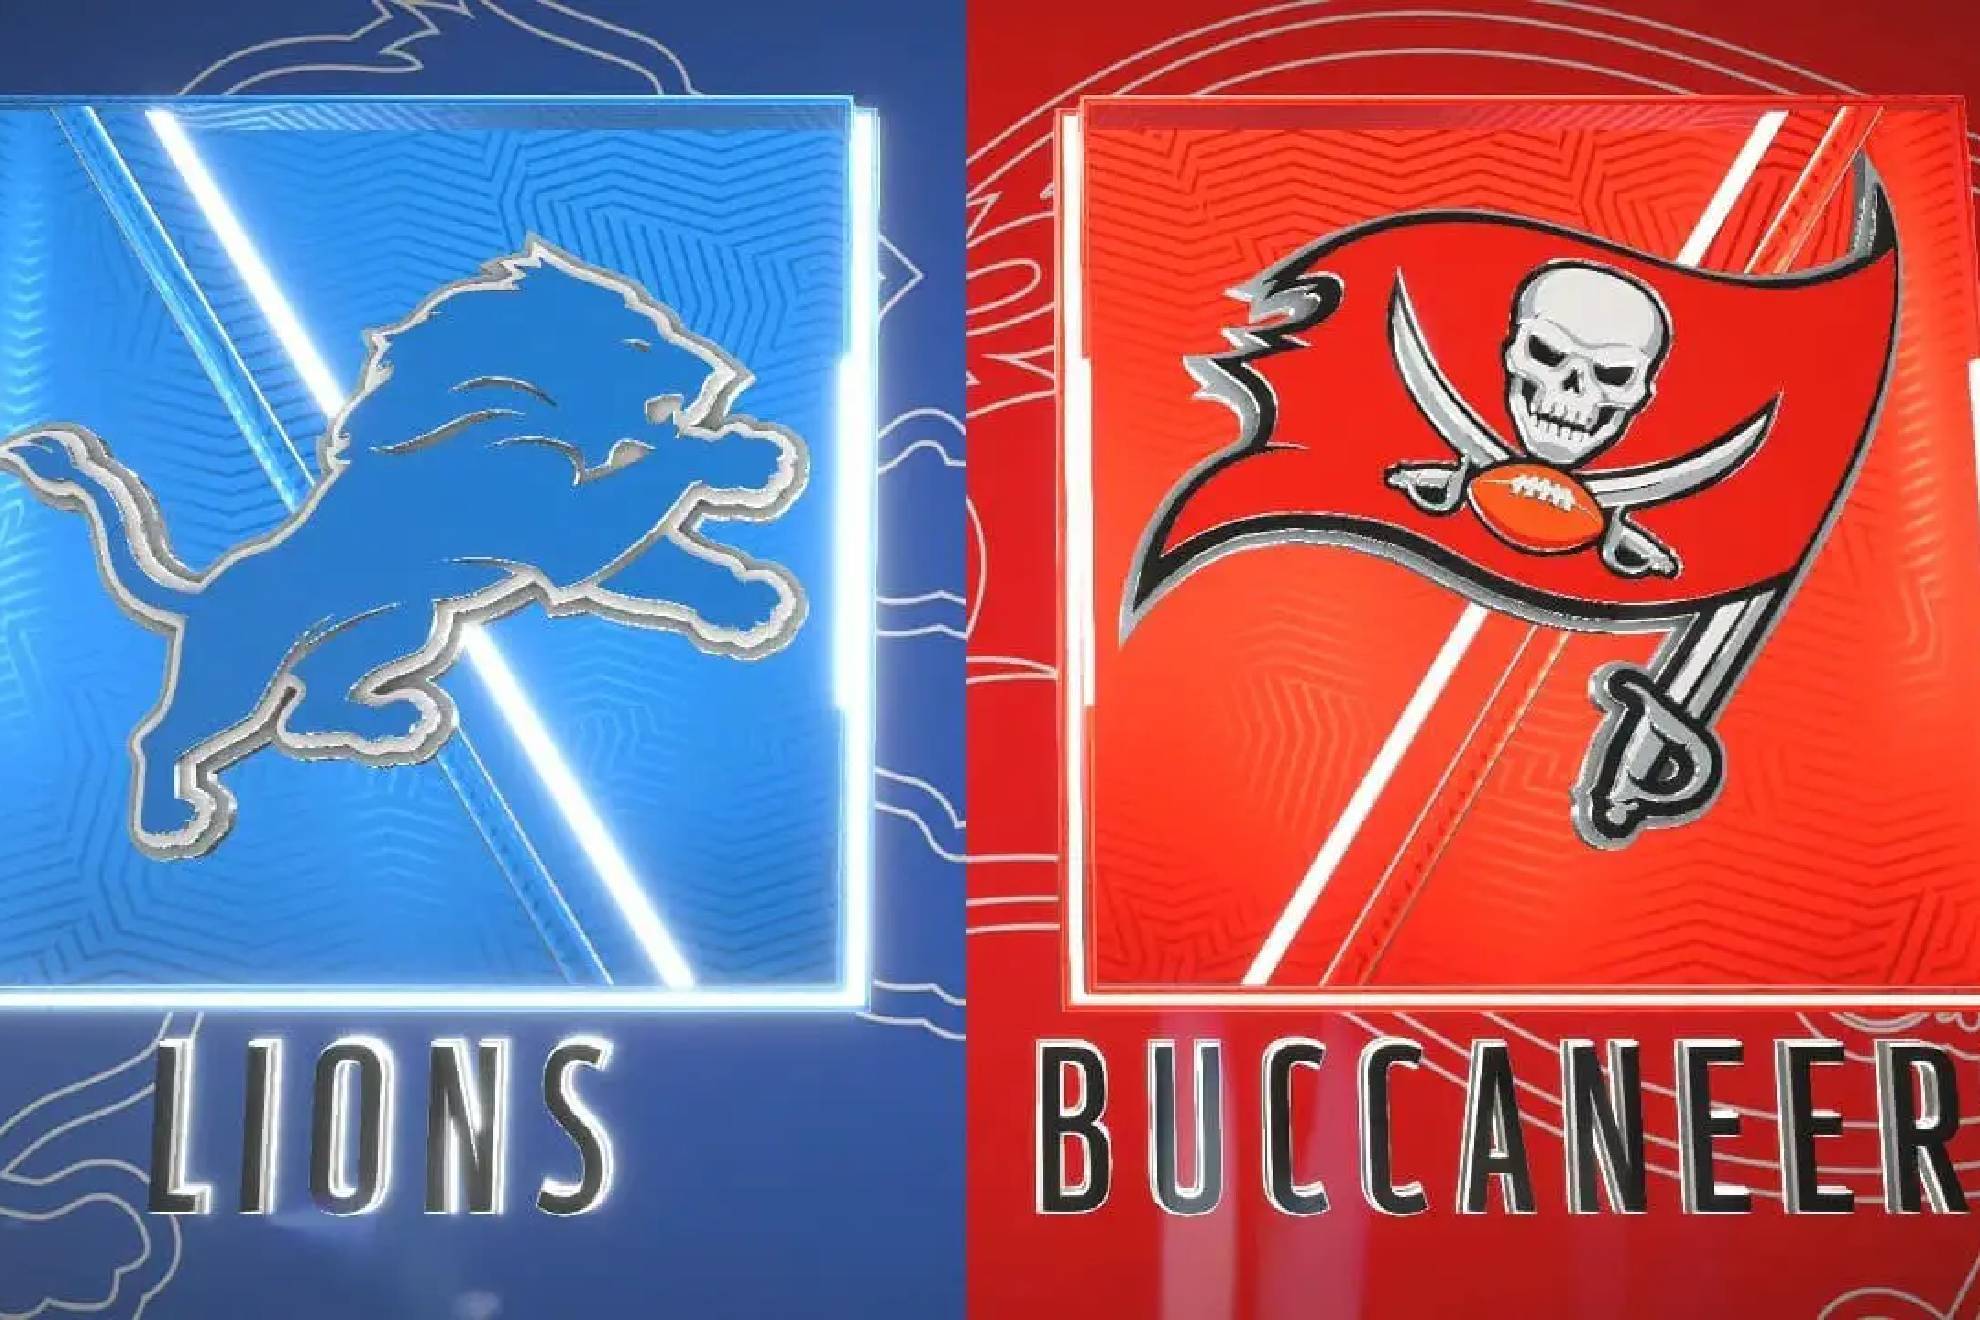 Lions vs. Buccaneers: dnde ver, a qu hora inicia y pronstico juego divisional Playoffs NFL